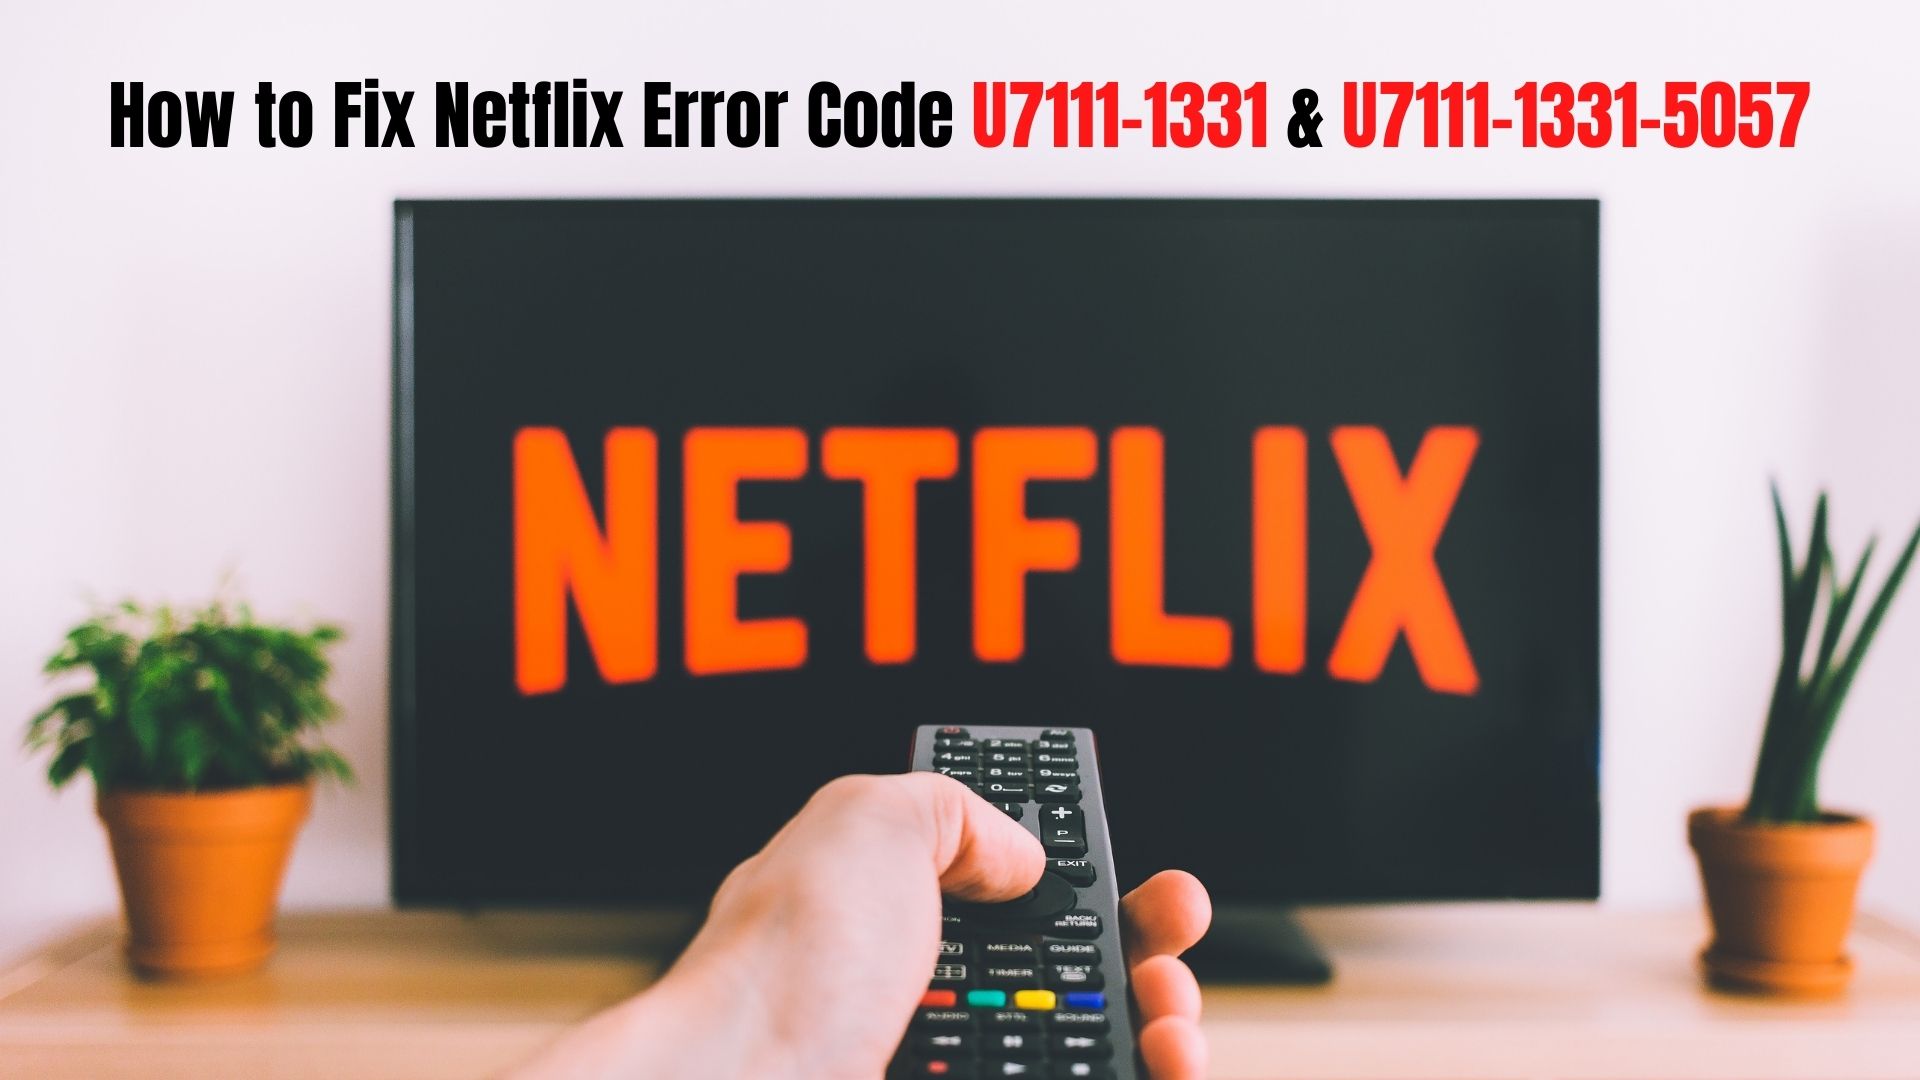 Fix Netflix Error Code U7111-1331 & U7111-1331-5057